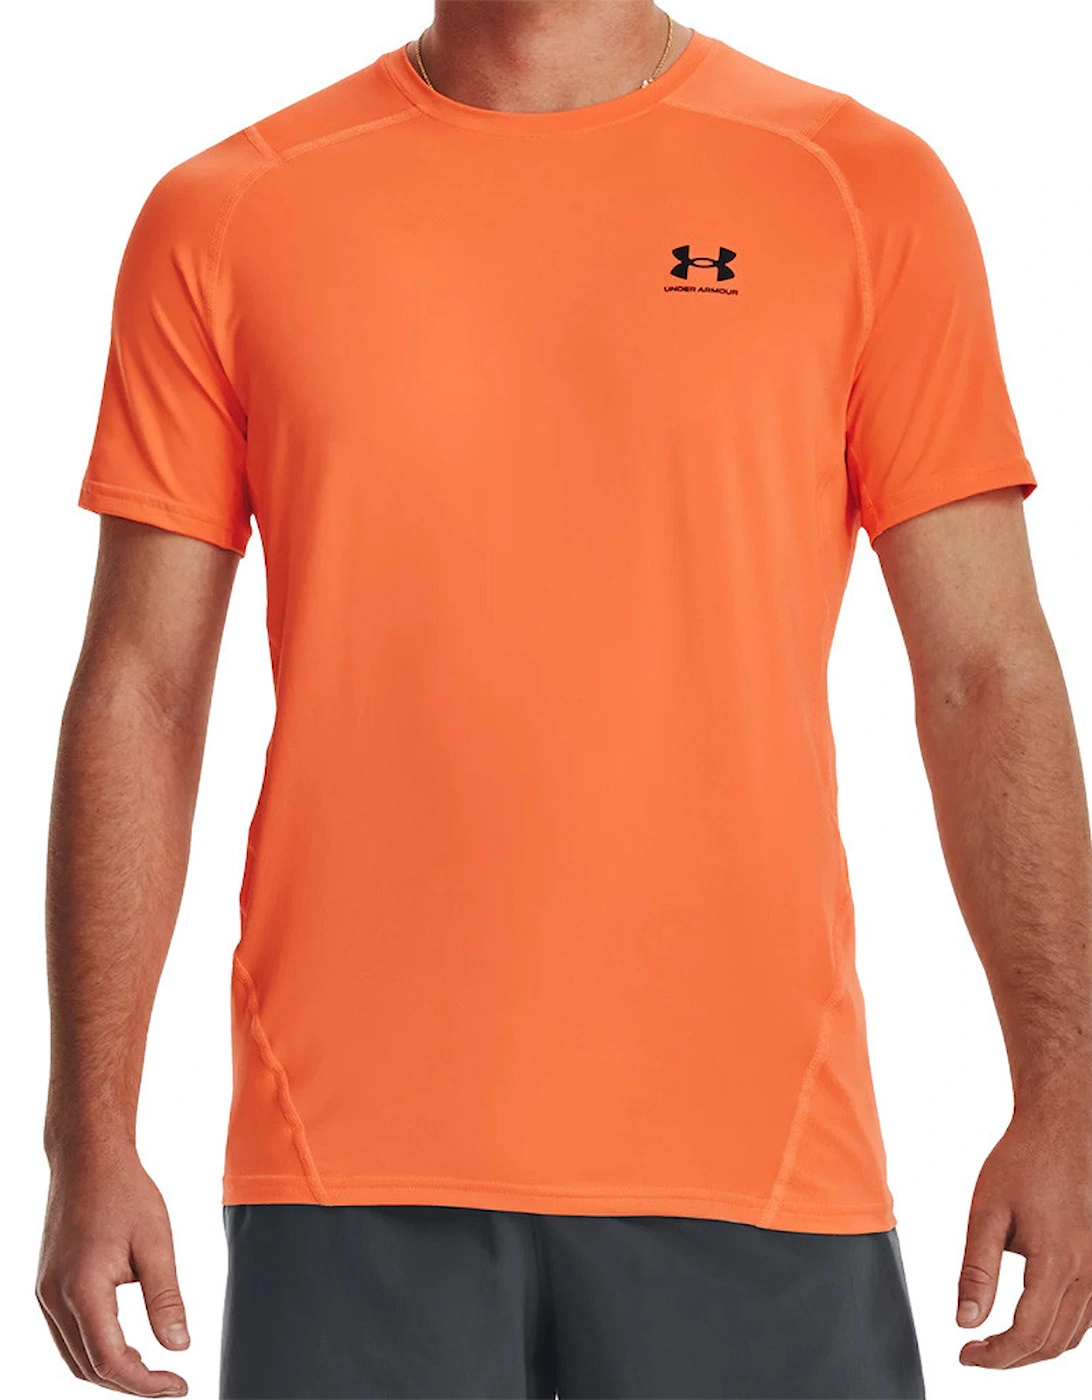 Mens Heat Gear Fitted T-Shirt (Orange)